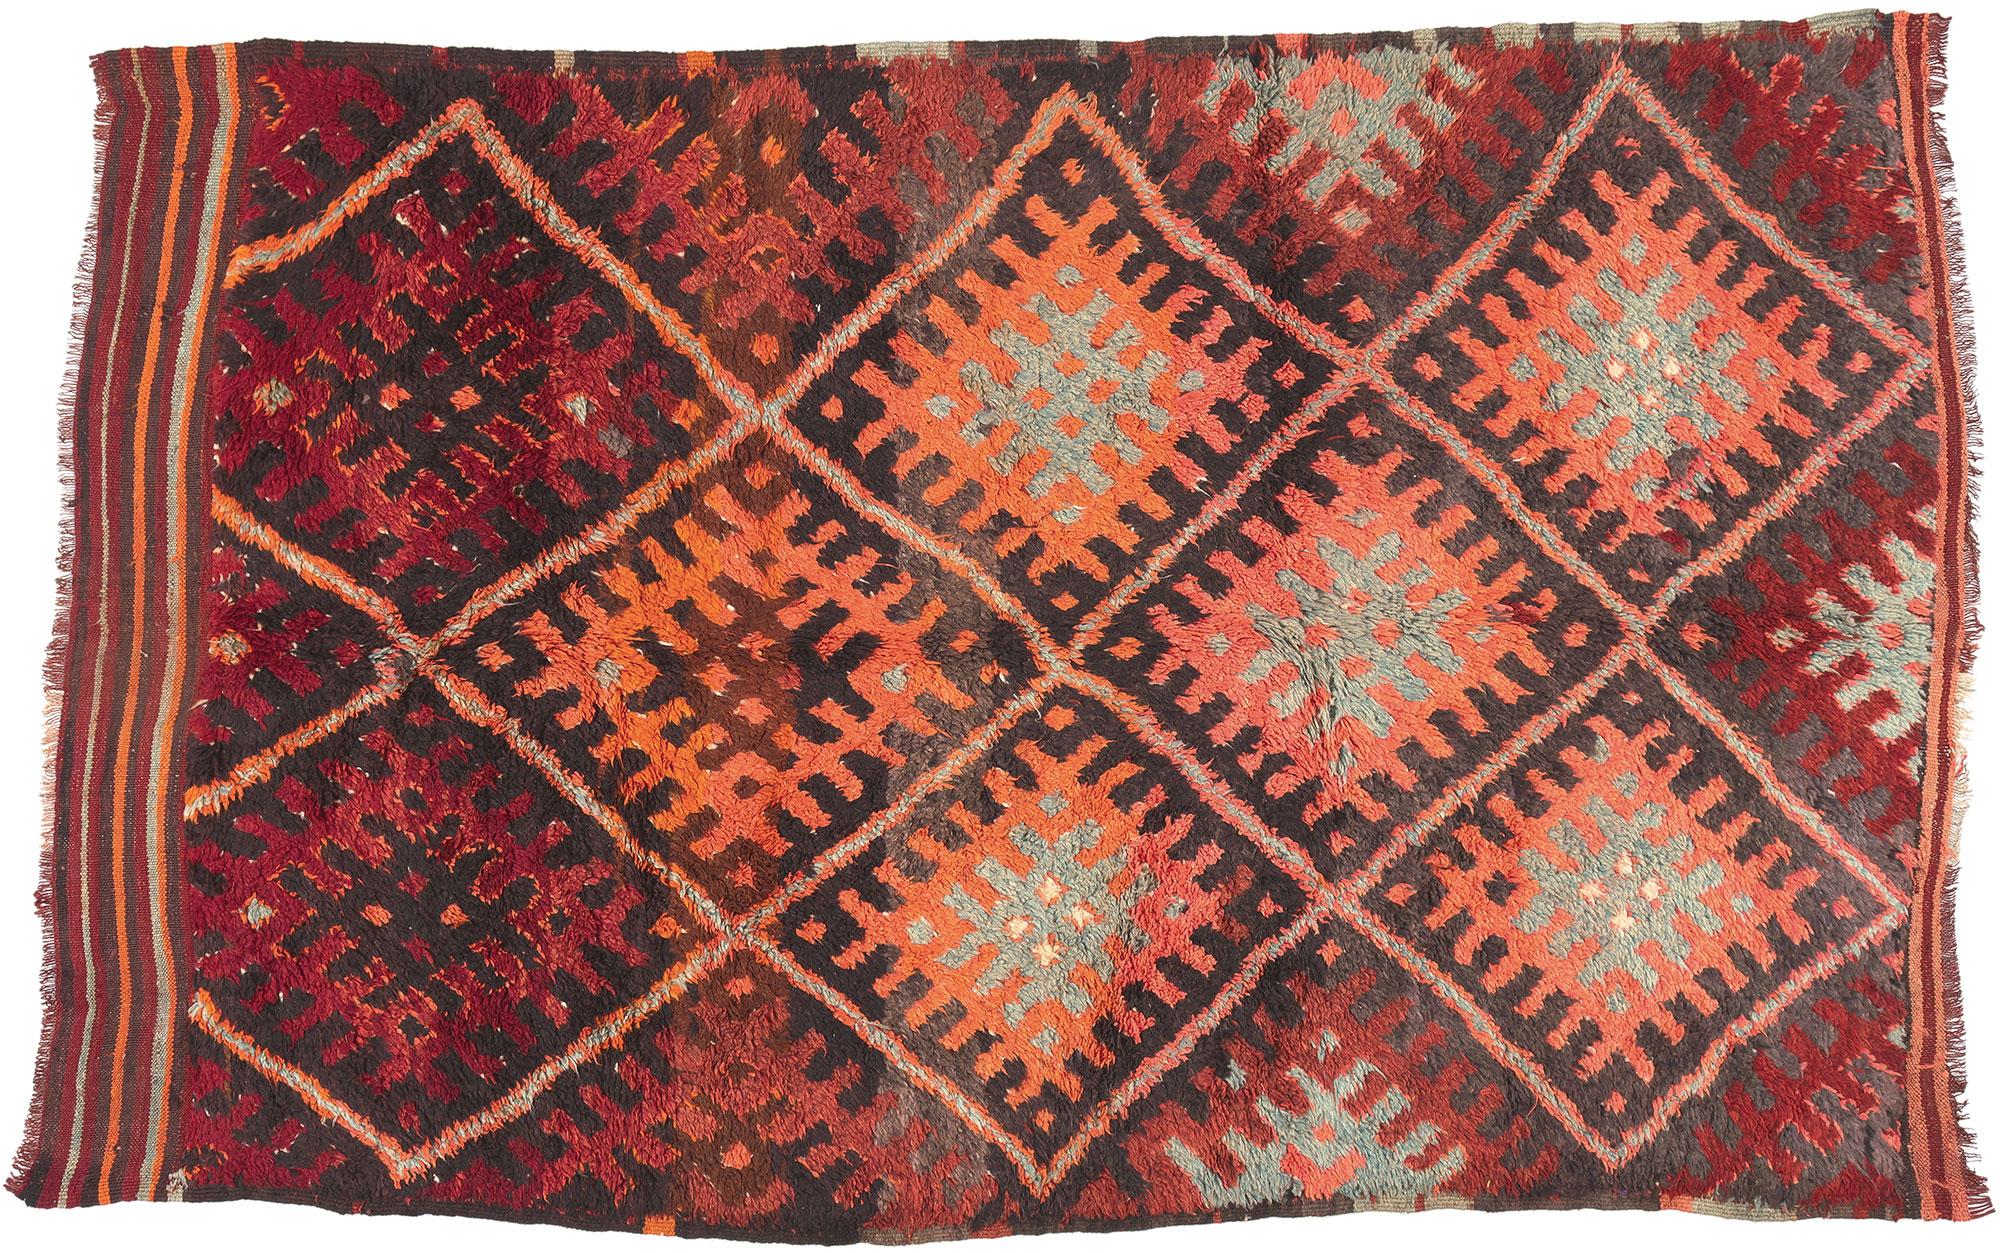 Vintage Beni MGuild Moroccan Rug, Midcentury Modern Meets Tribal Enchantment For Sale 3